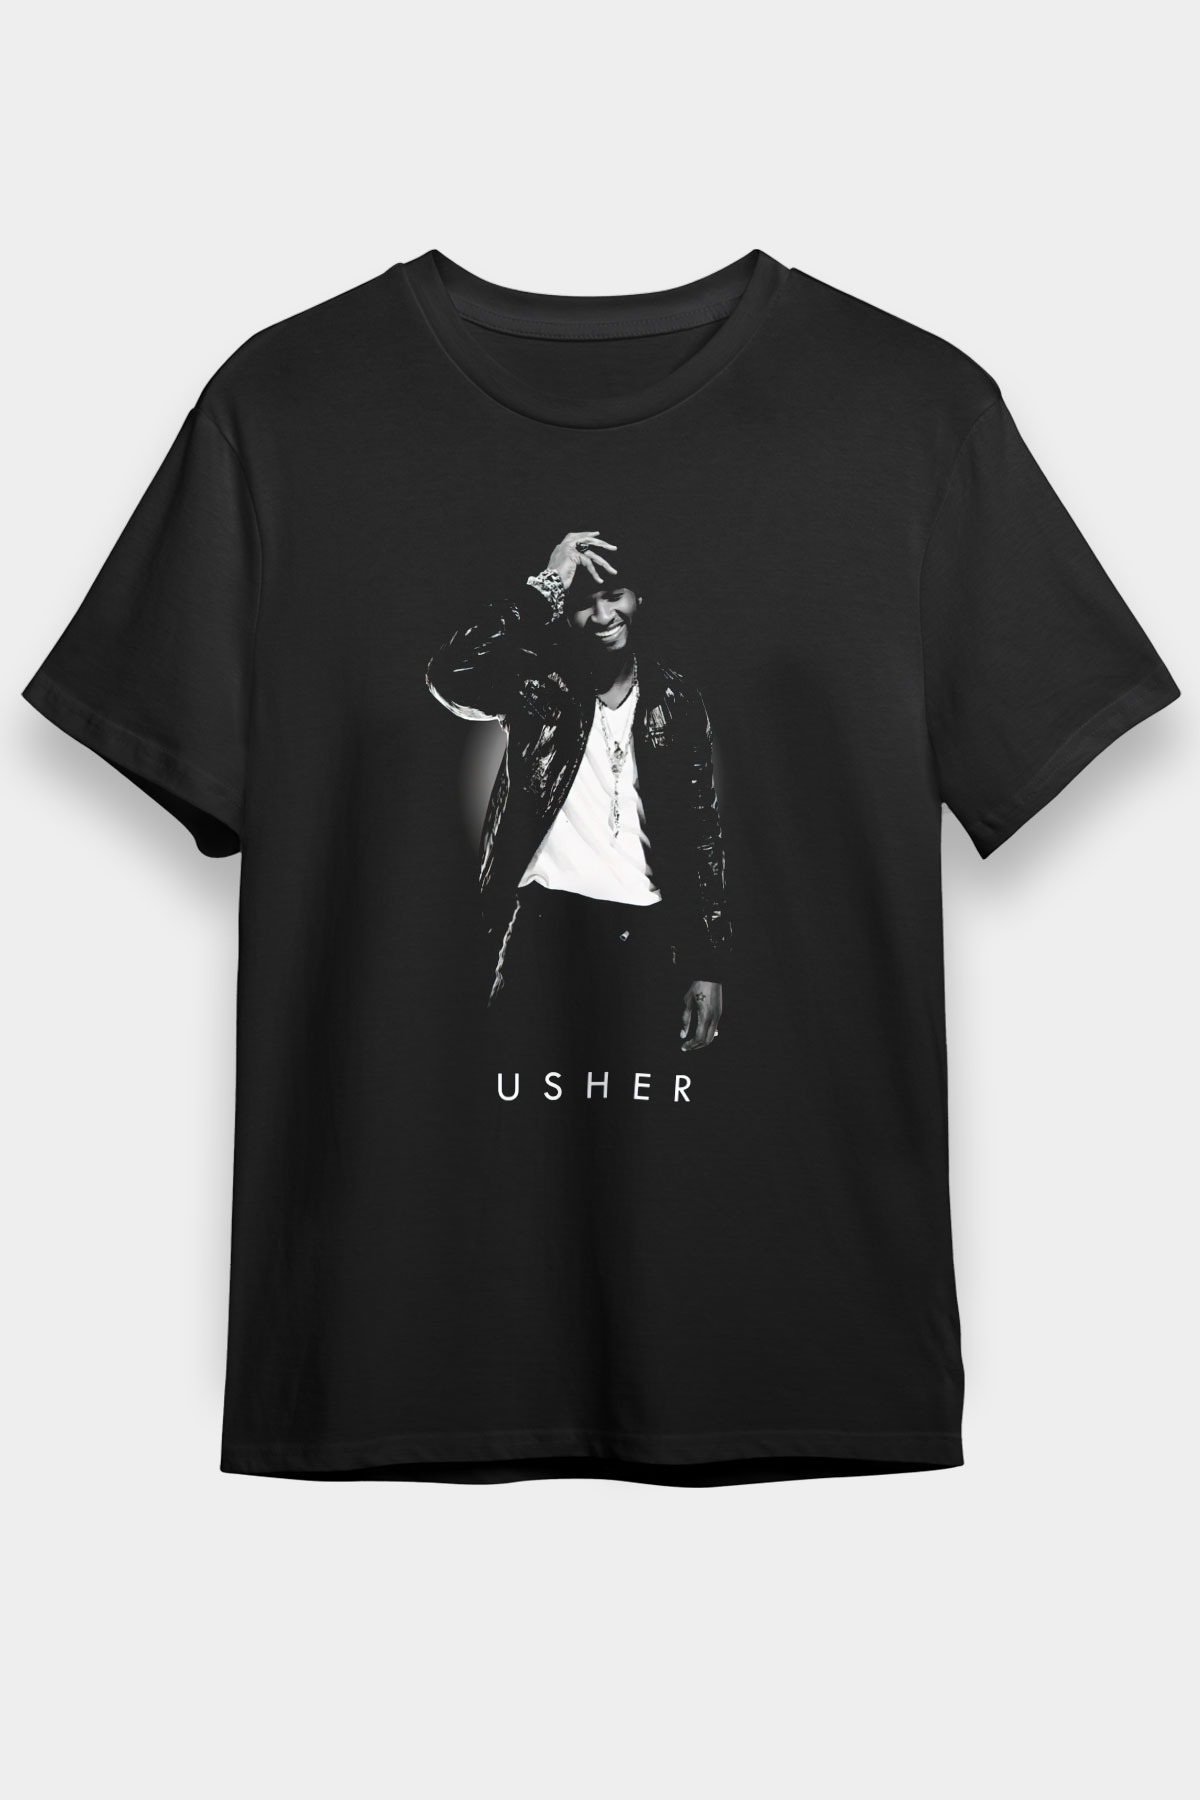 Usher T shirt,Music Band,Unisex Tshirt 04/